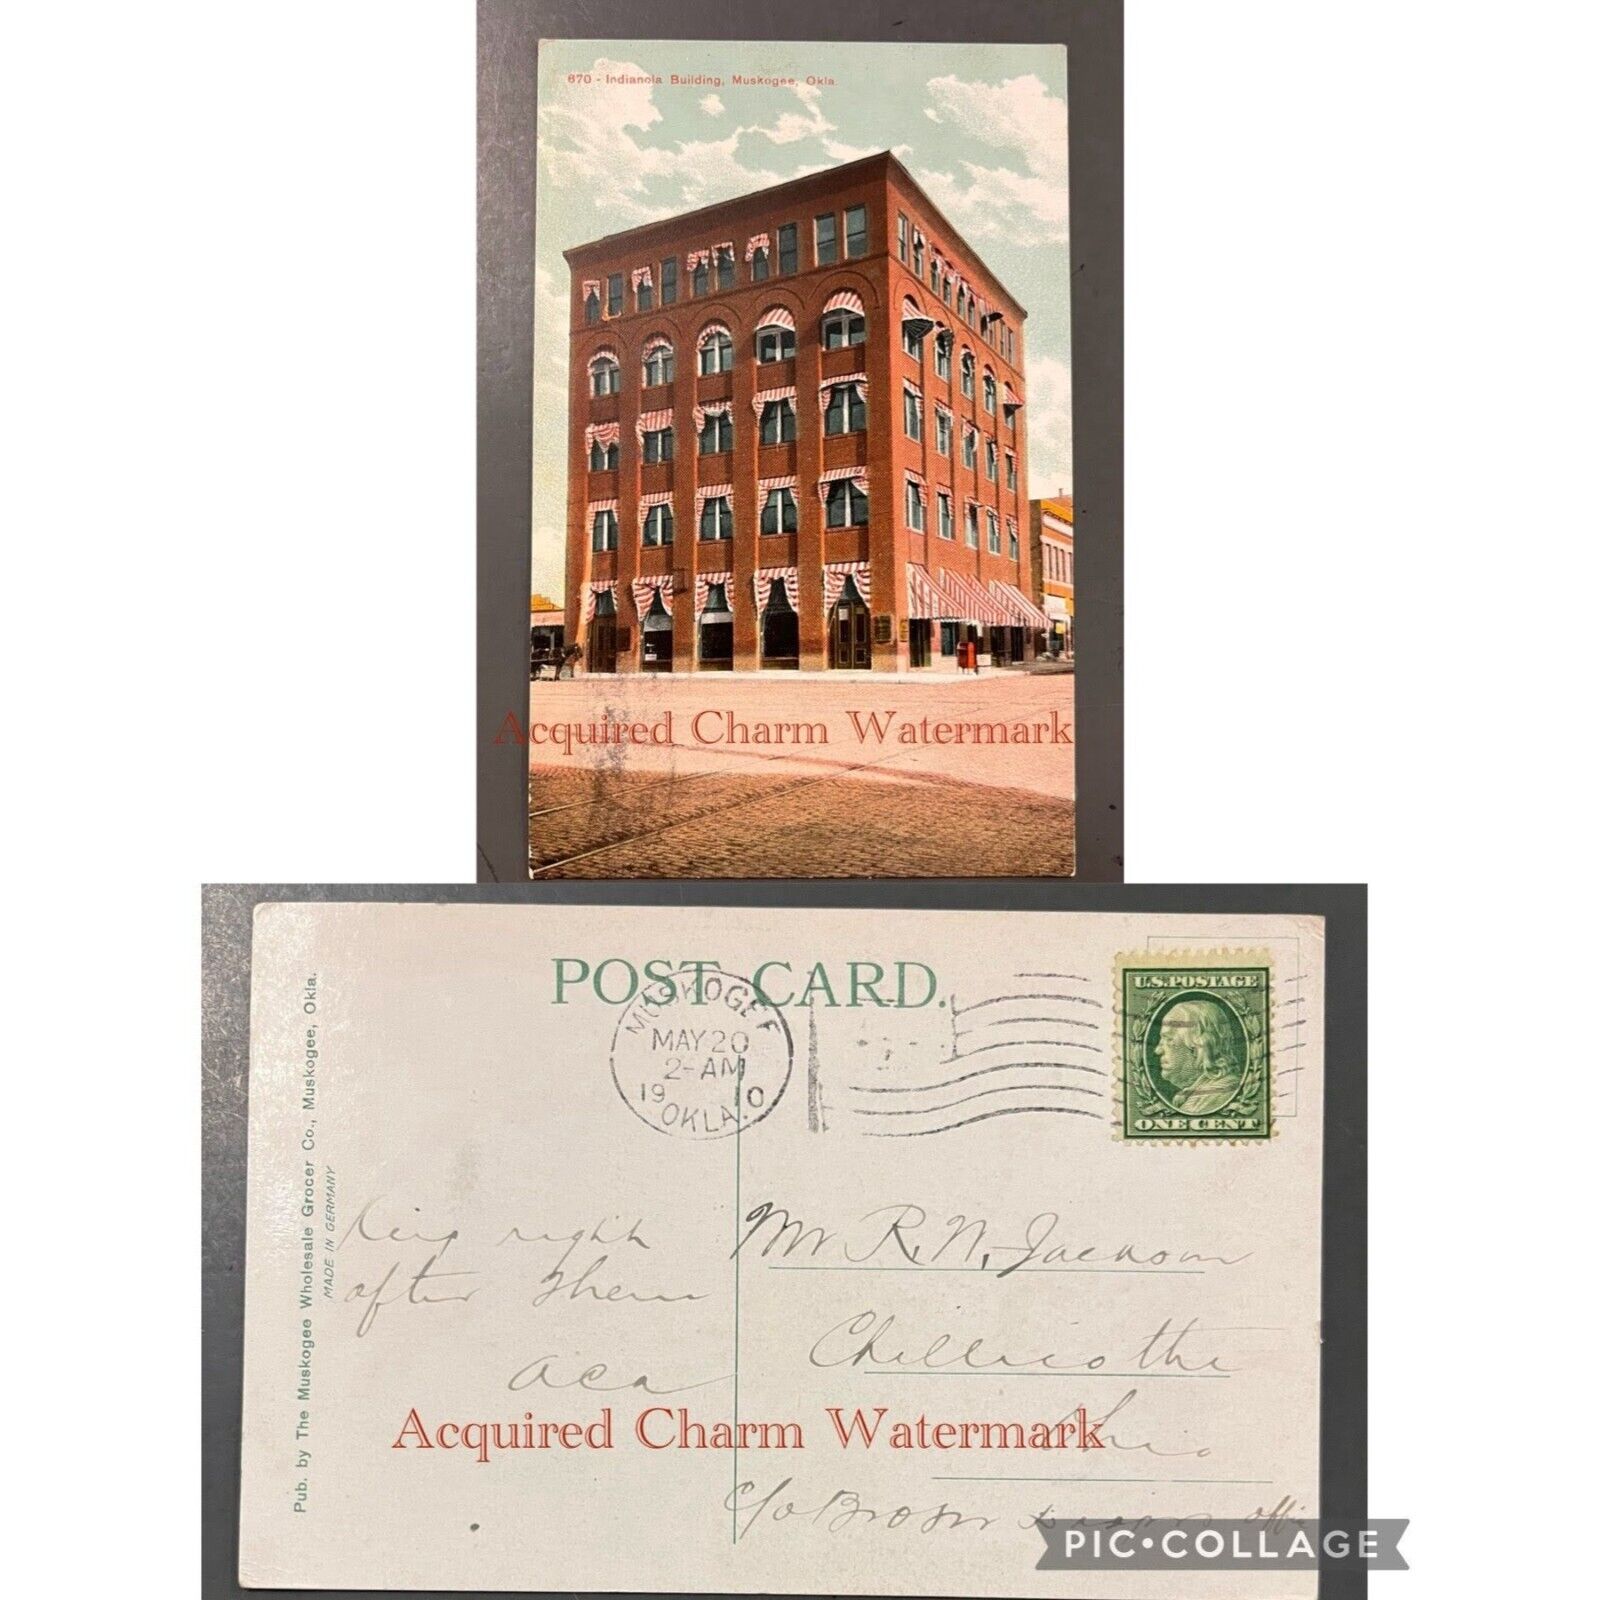 Antique Postcard, 670-Indianola Building, Muskogee, Okla. May 20, 2 AM, 1910